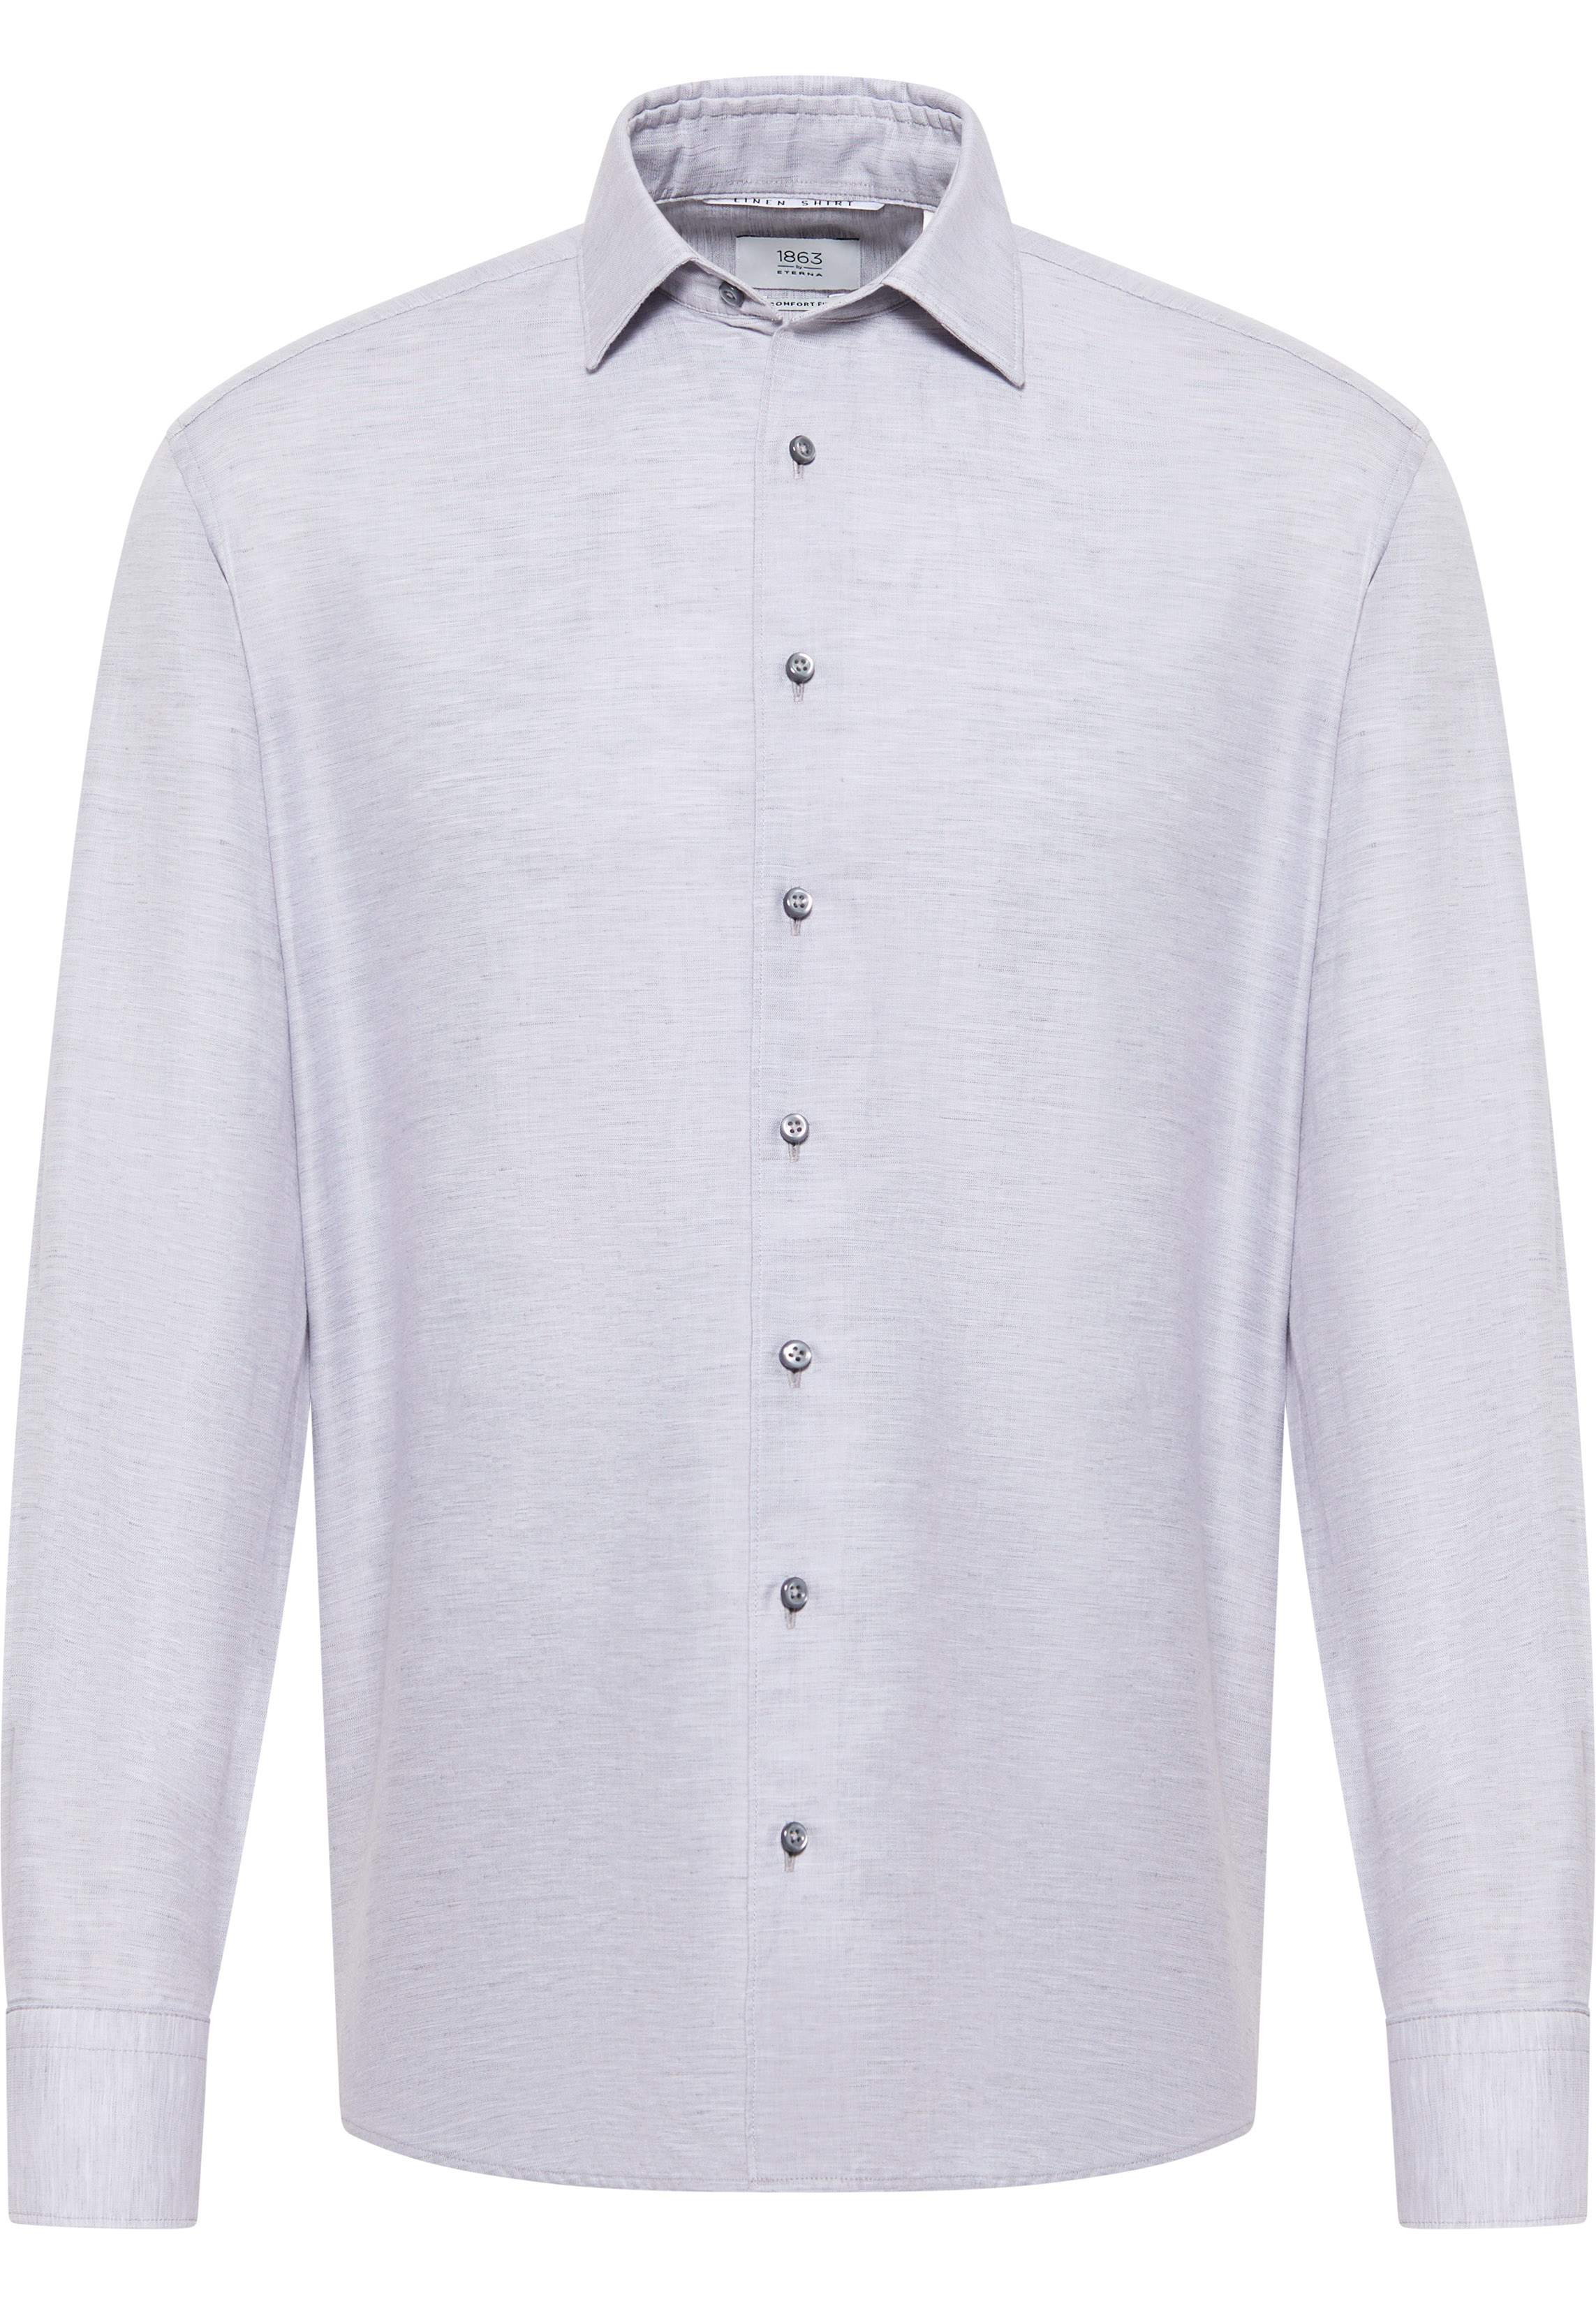 COMFORT FIT Linen Shirt in grey plain